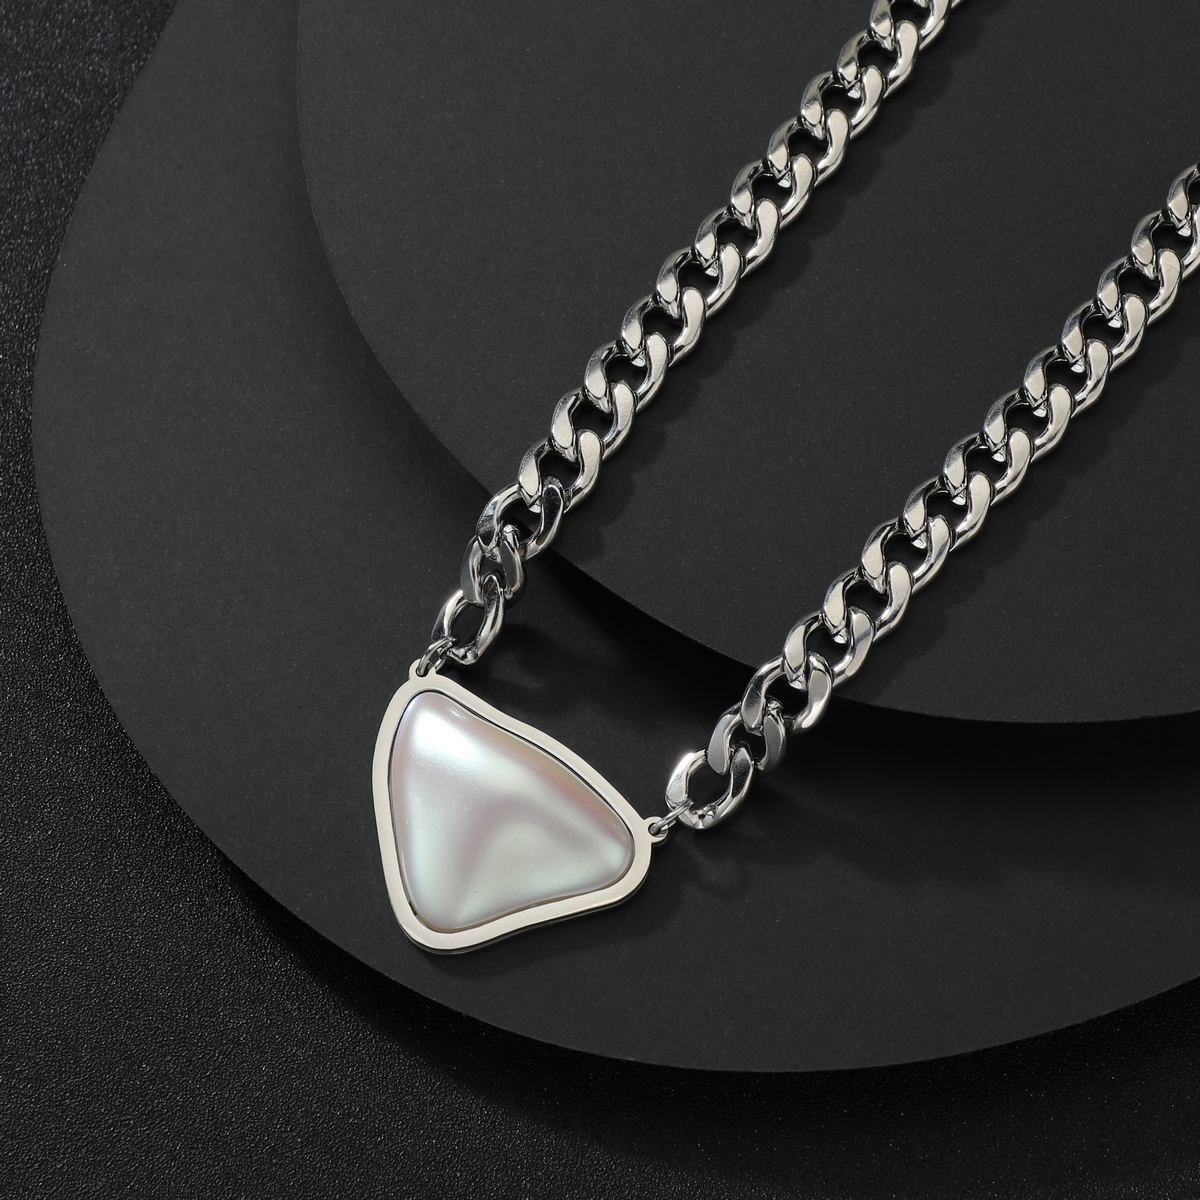 Heartbeat Steel Necklace by Planderful - Hip-Hop Street Style Jewelry for Men